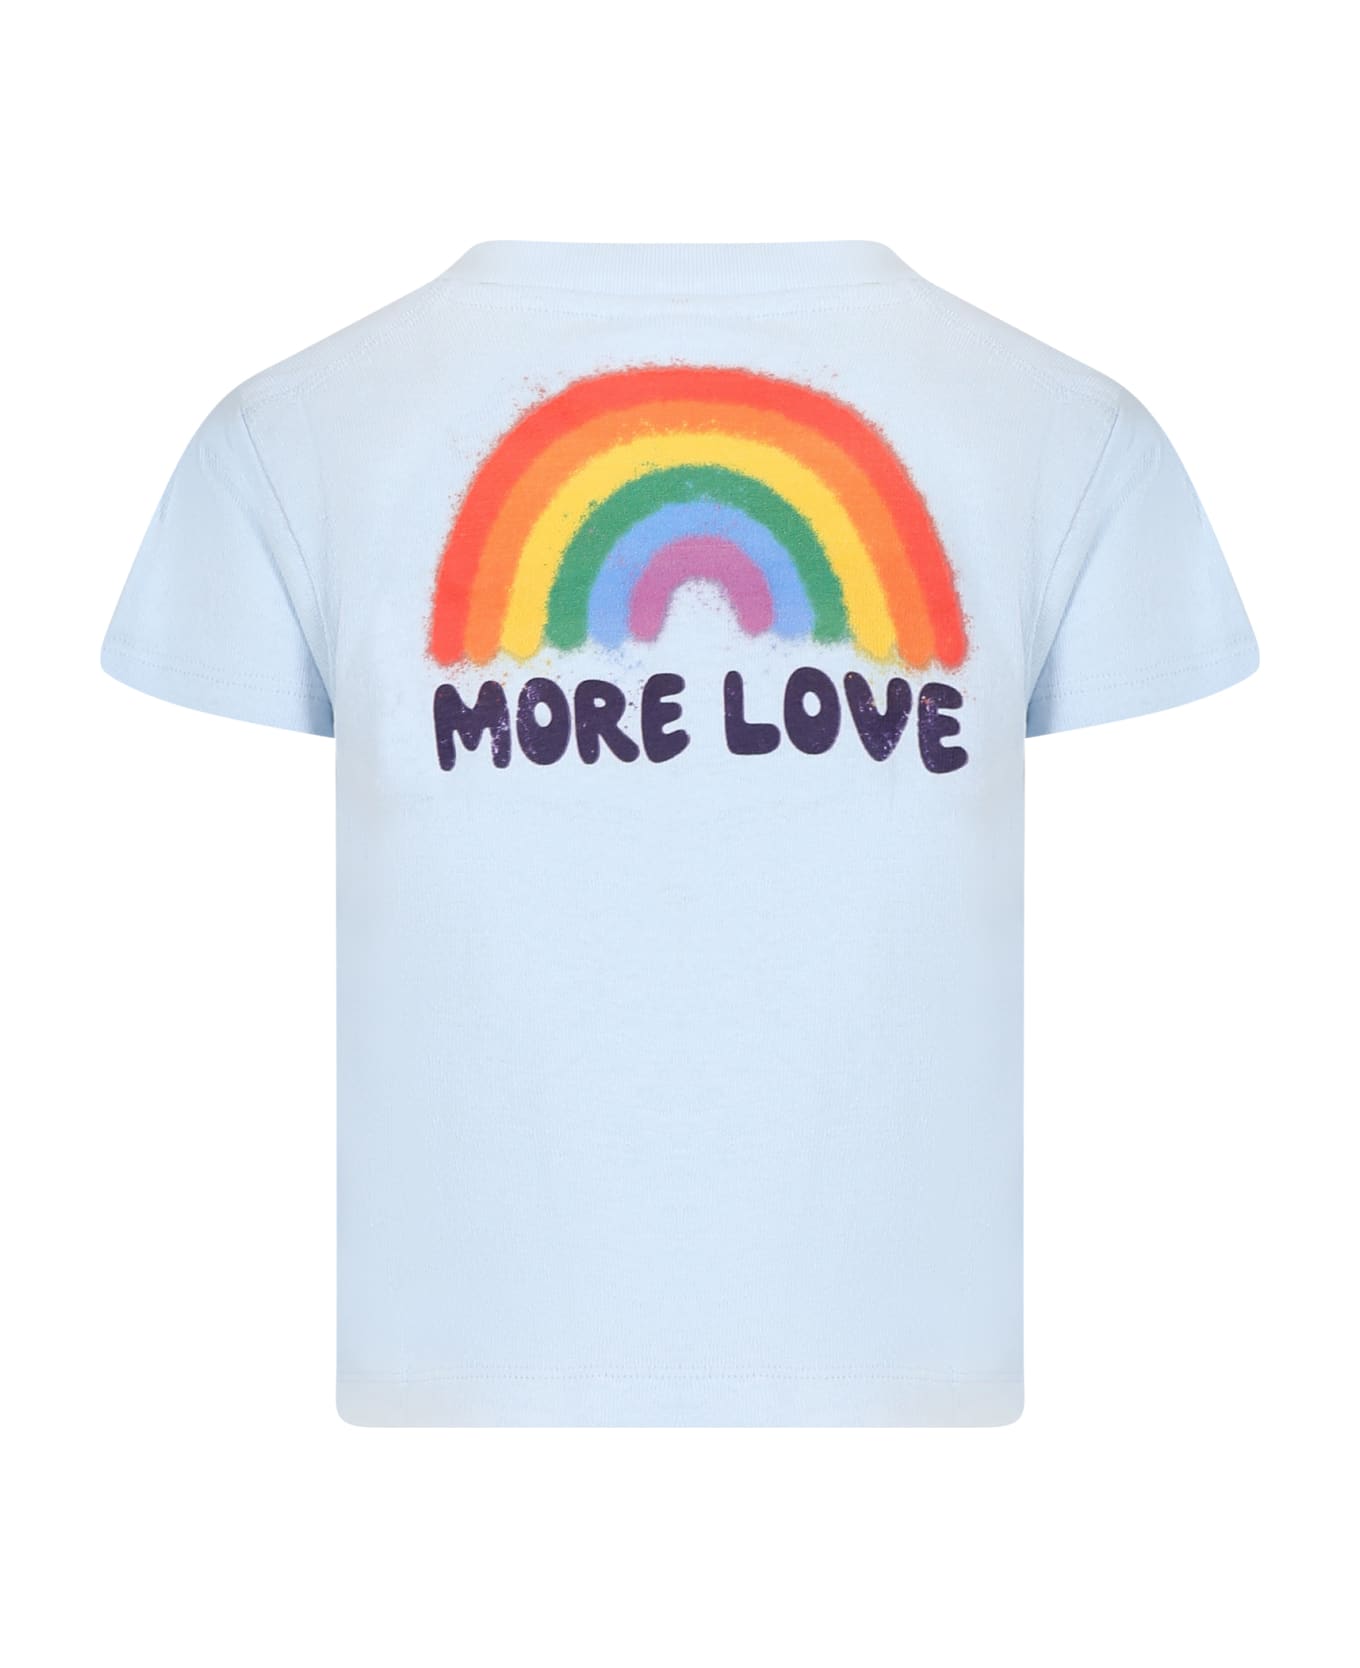 Molo Sky Blue T-shirt For Girl With Rainbow - Light Blue